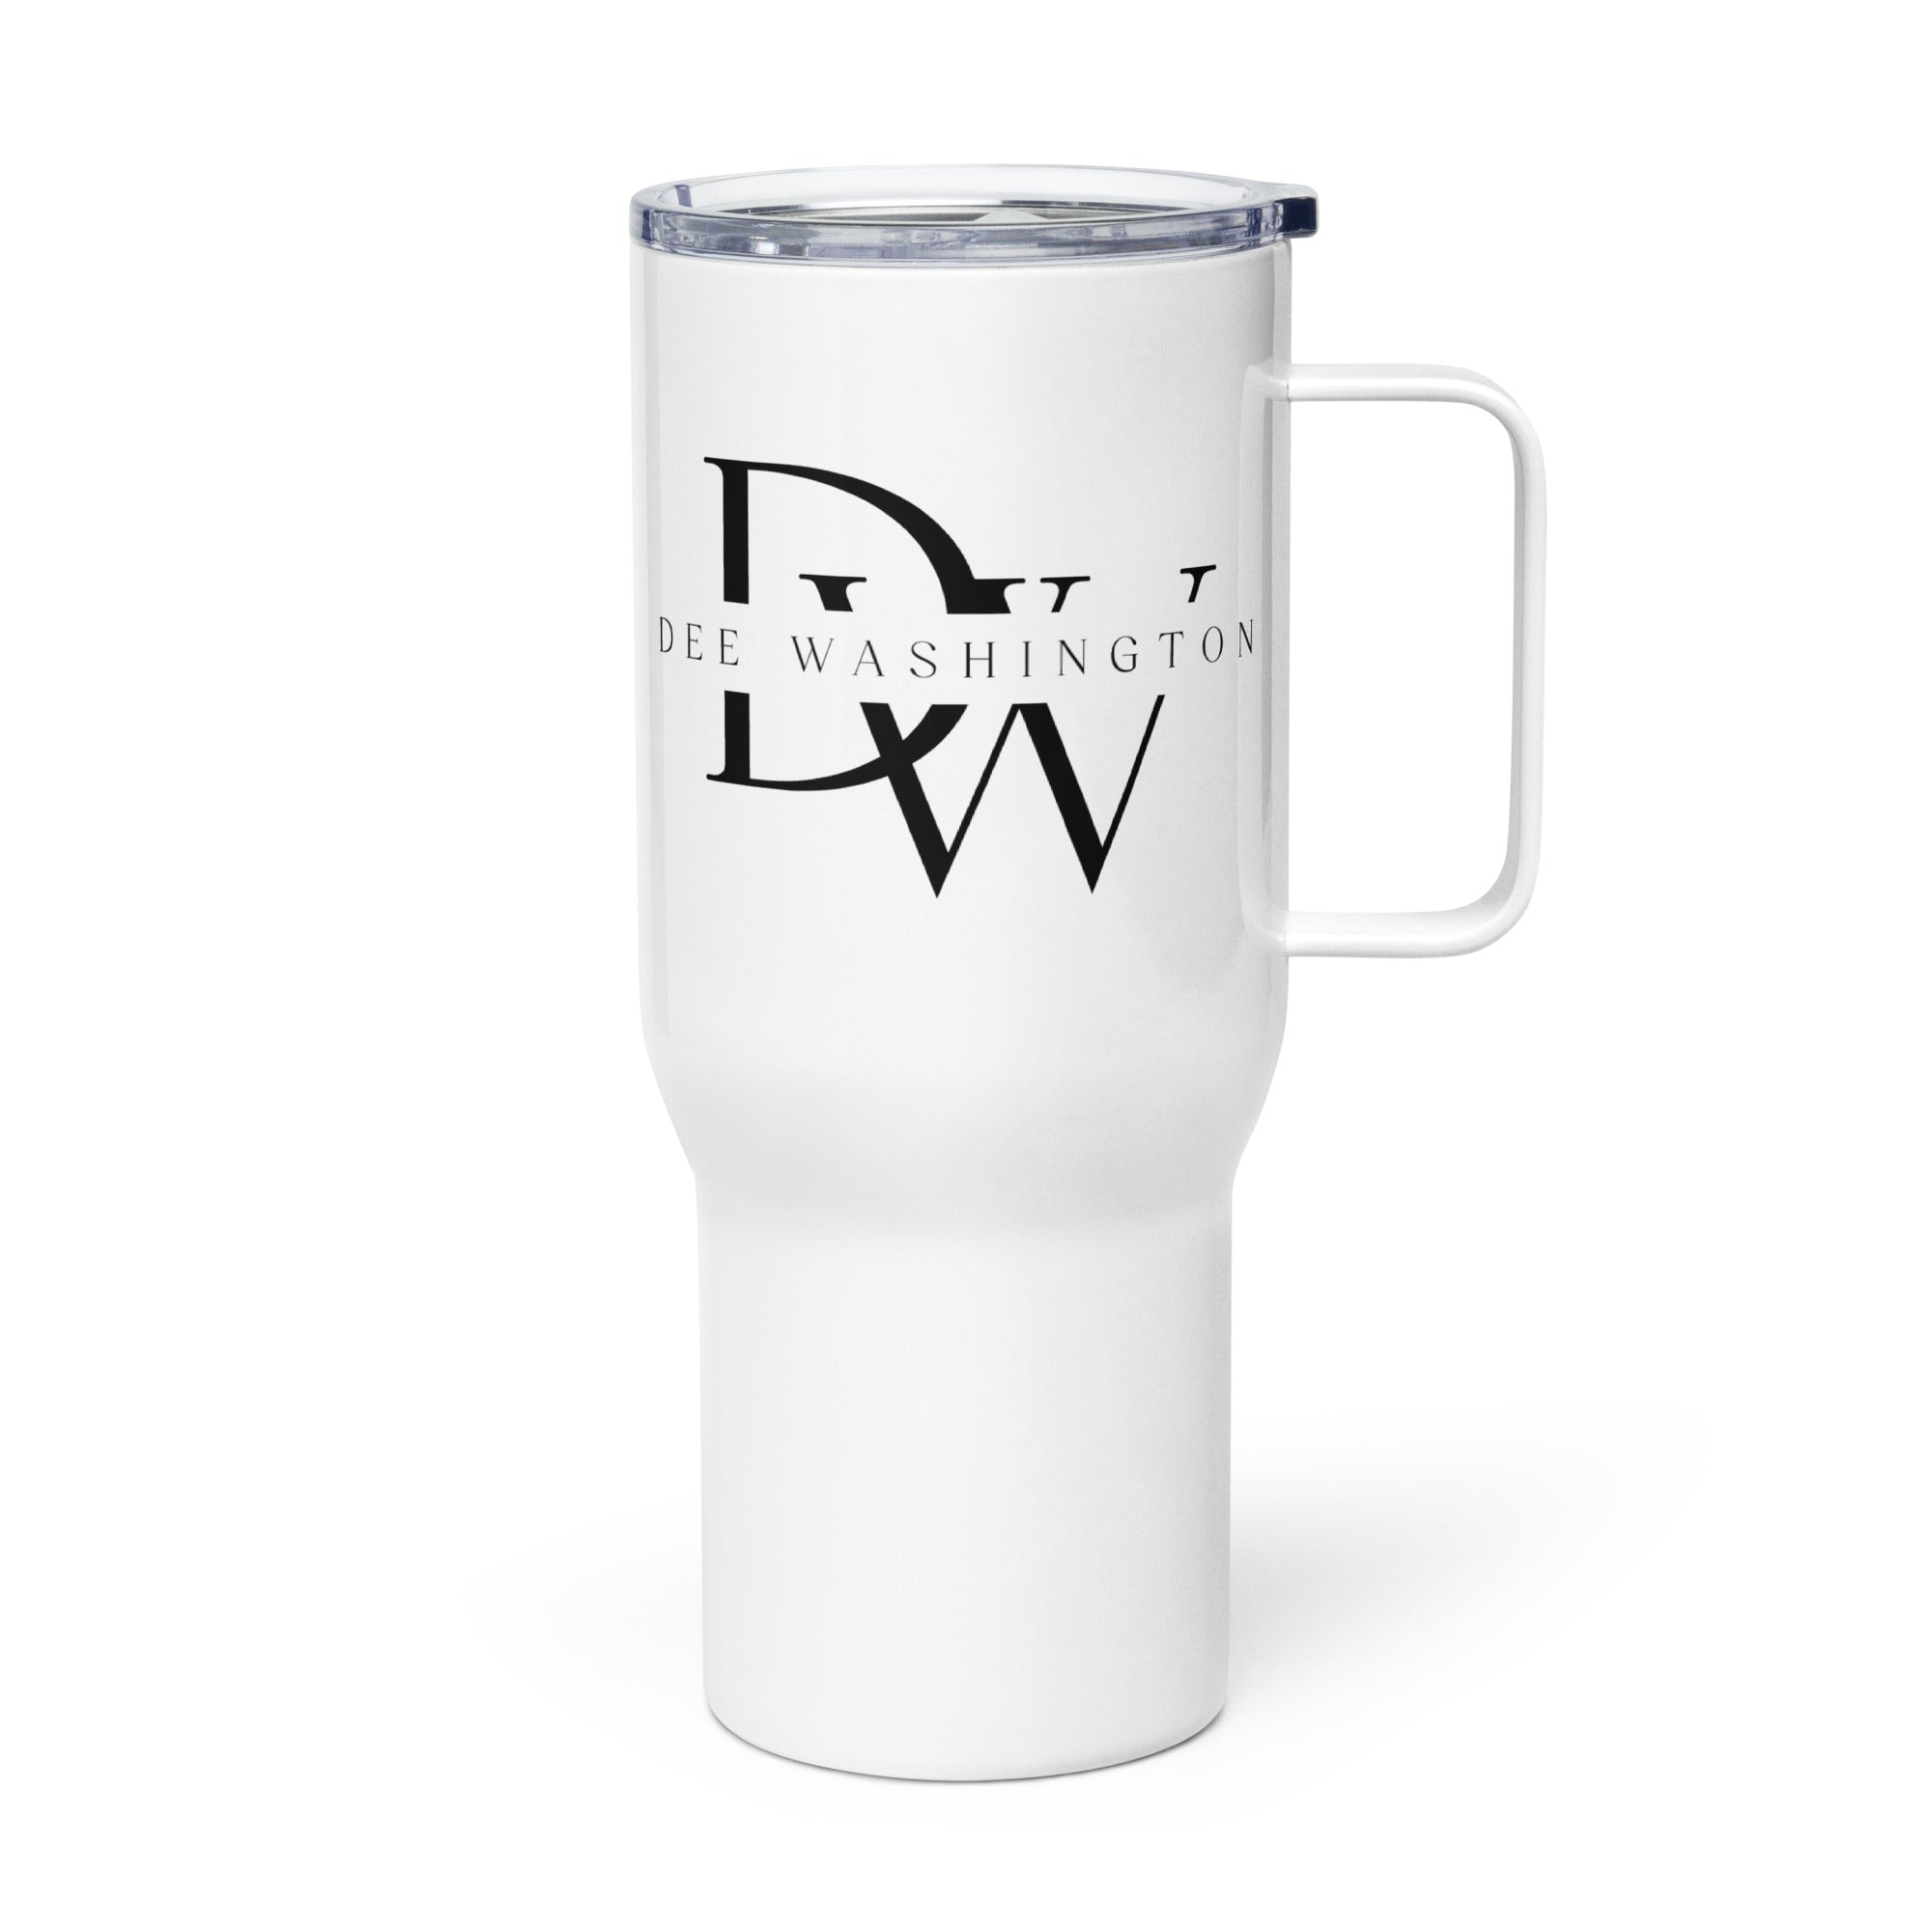 Dee Washington - Travel mug with a handle